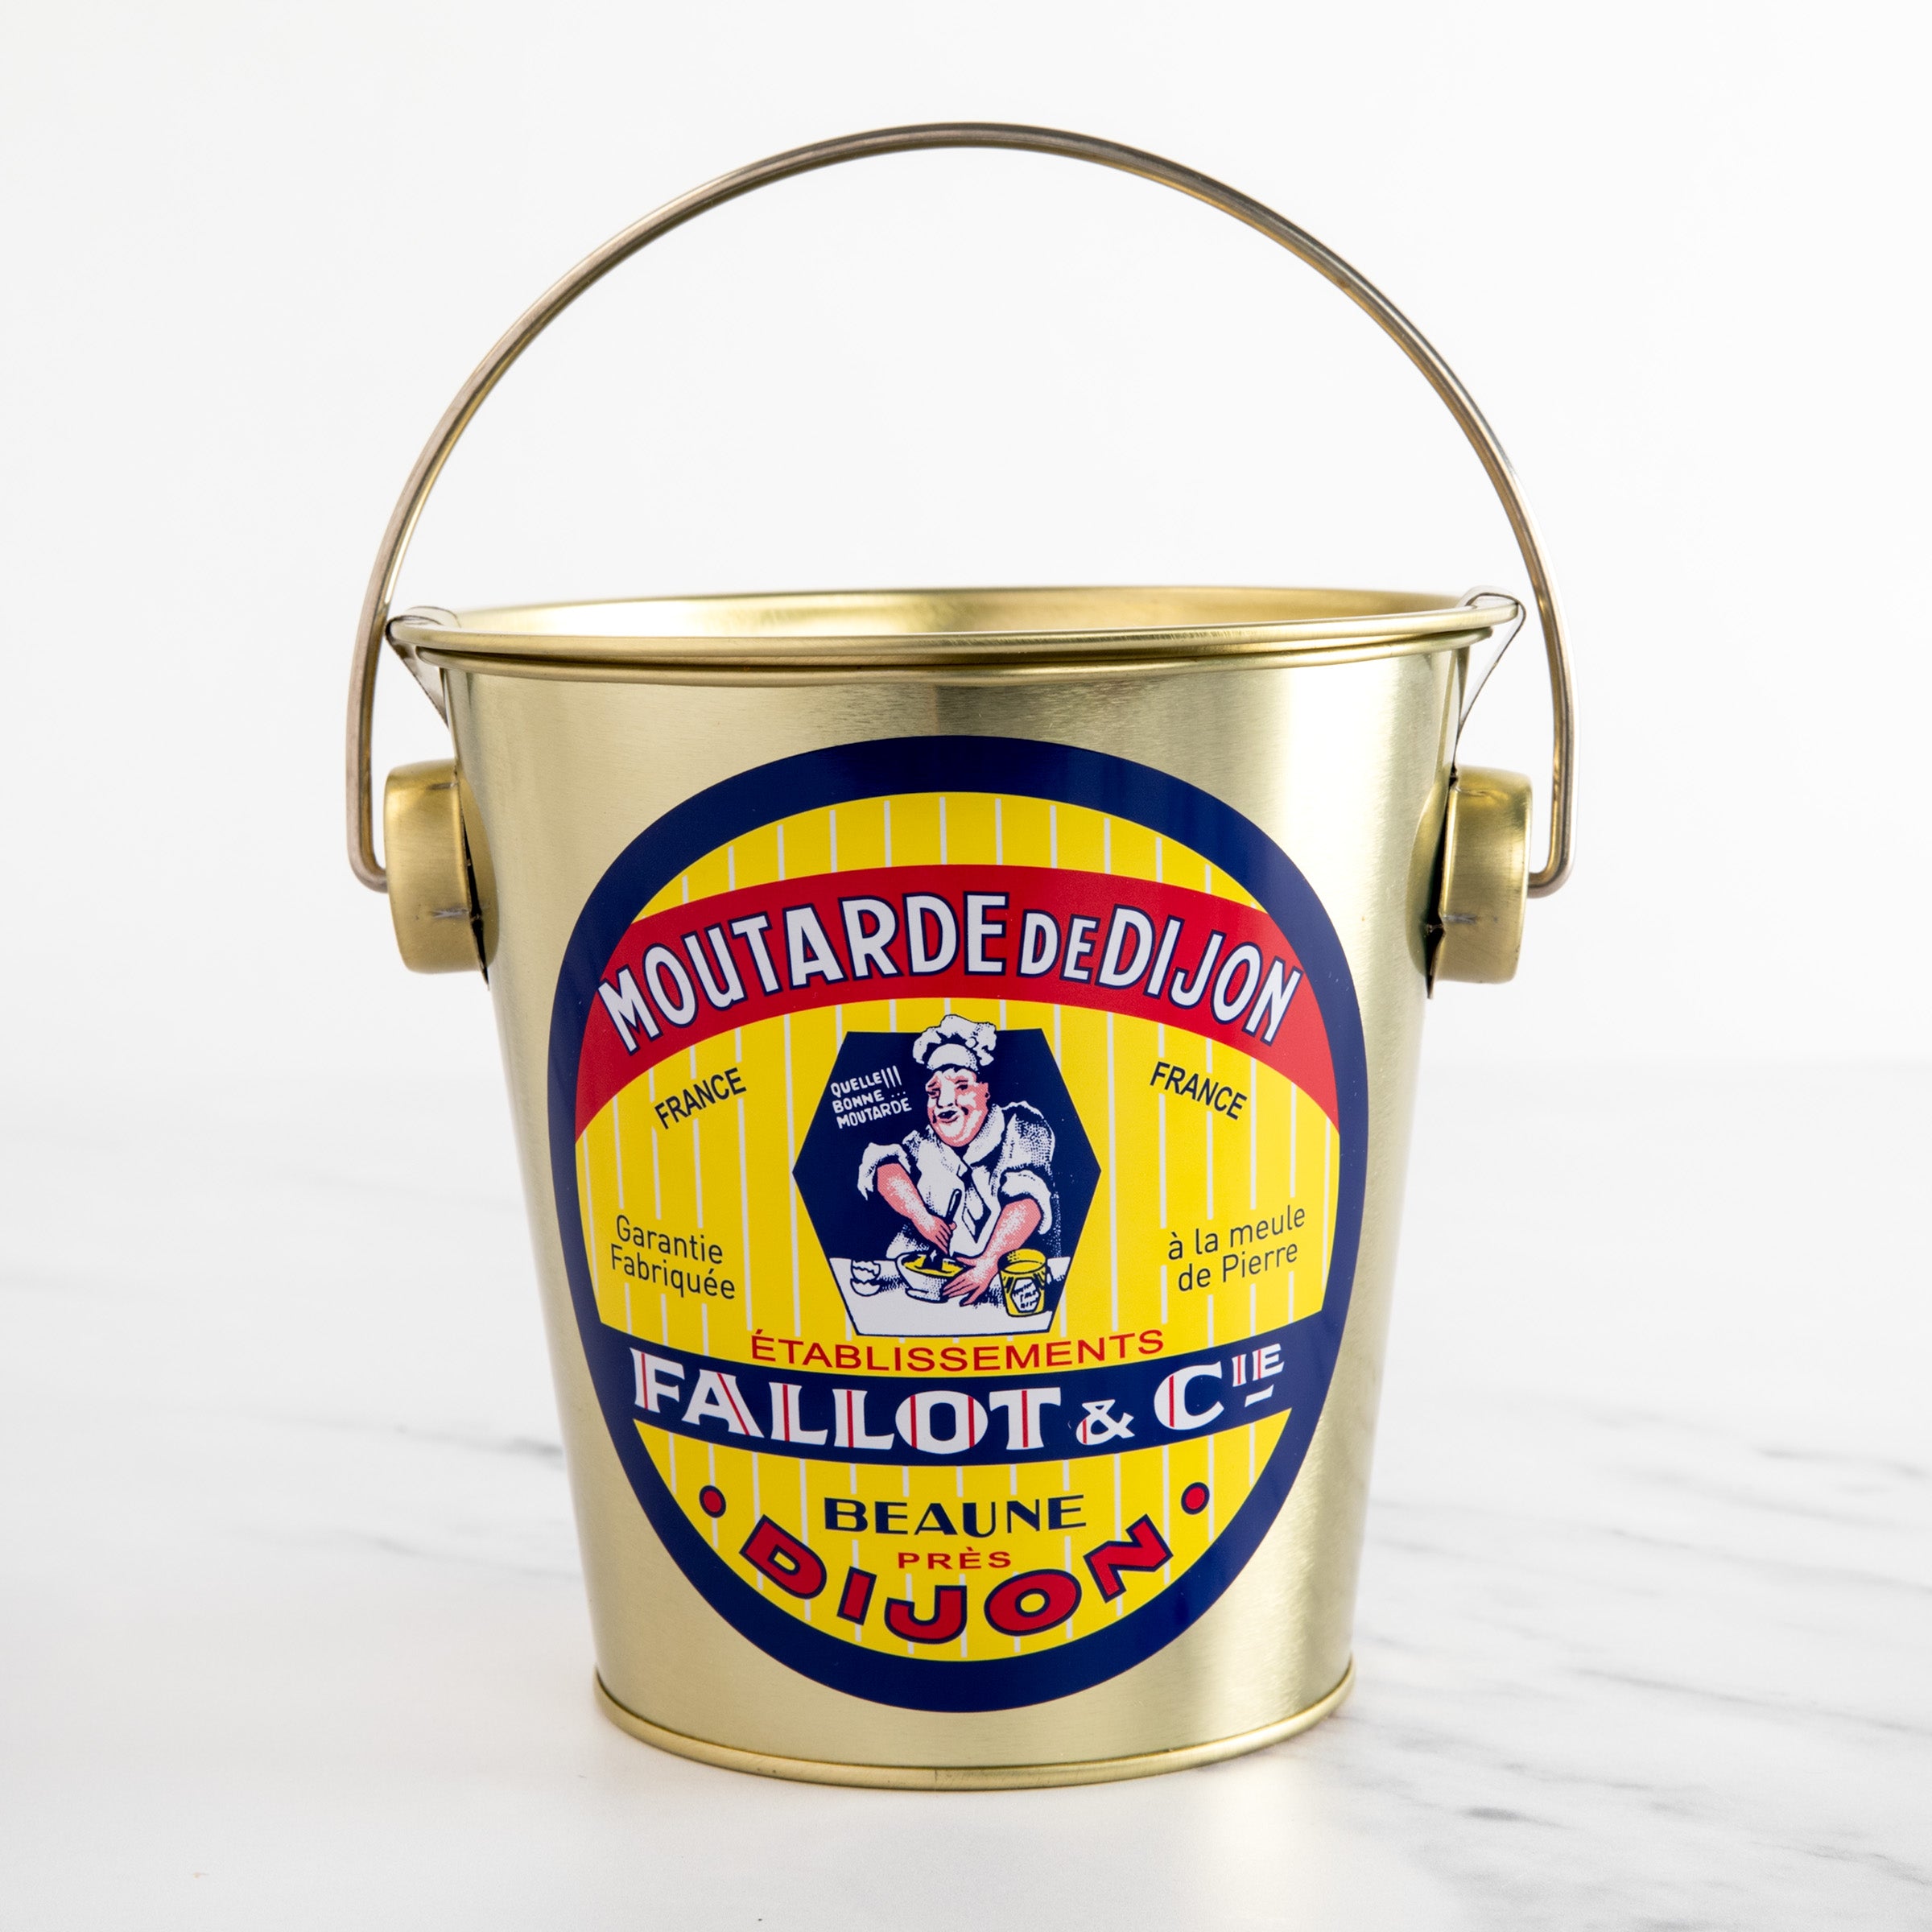 igourmet_1069_Dijon Mustard Gift Pail_Edmond Fallot_Condiments & Spreads